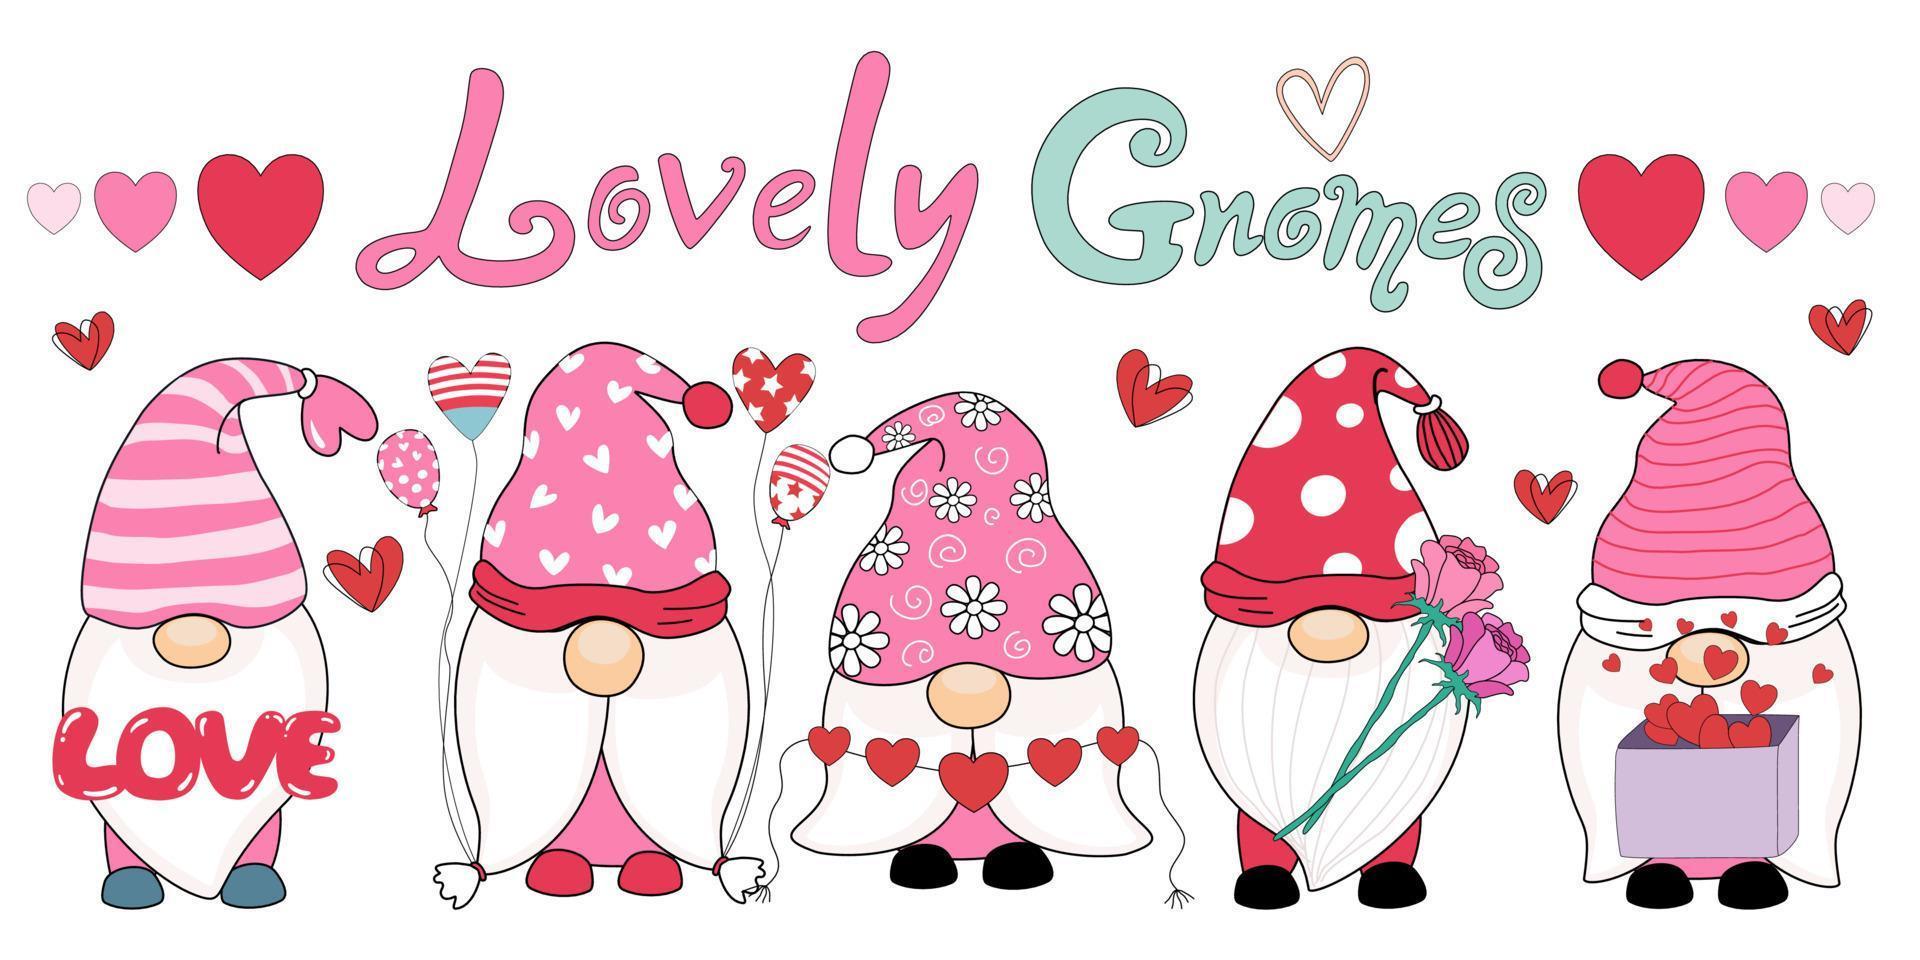 Vektor-Illustration schöne Gnome-Charaktere in Rot- und Rosatönen im Doodle-Stil gestaltet vektor